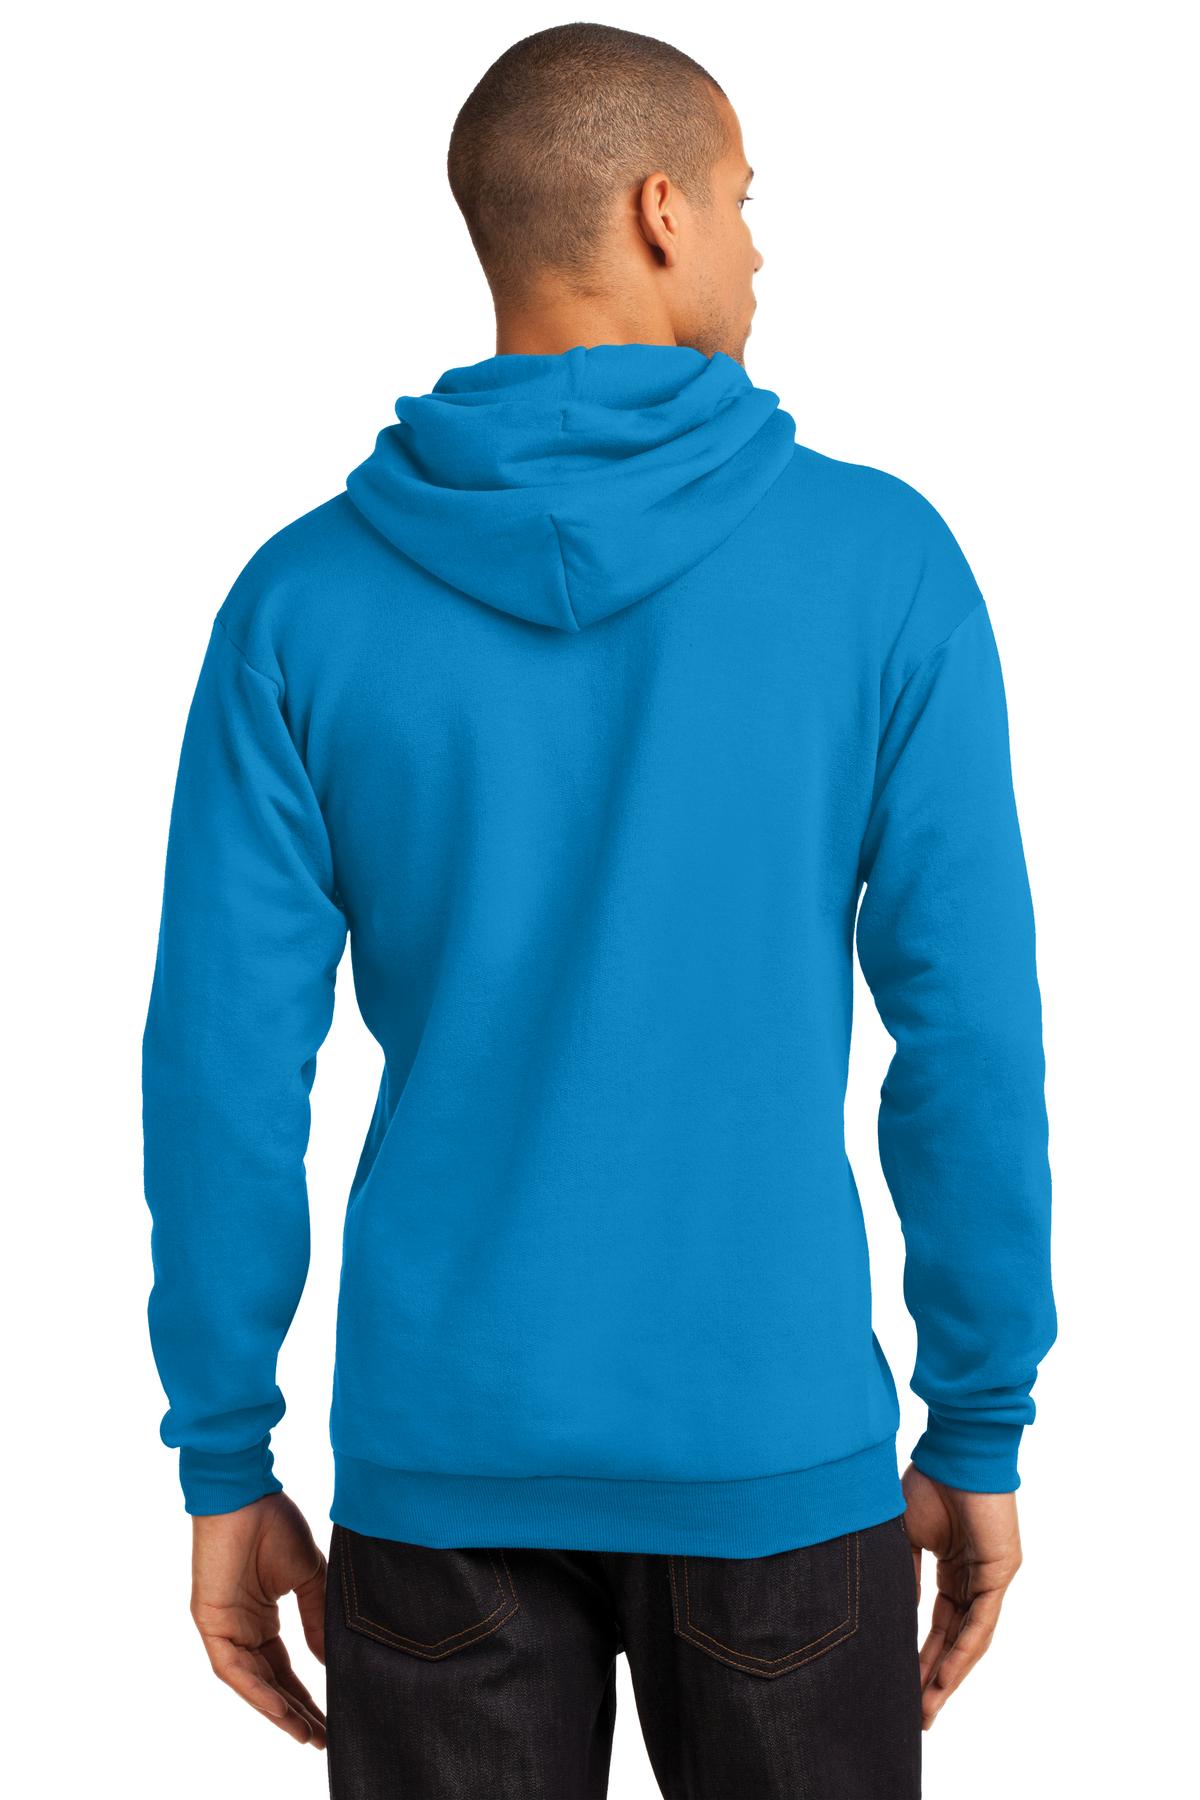 Port & Company® - Core Fleece Pullover Hooded Sweatshirt. PC78H [Sapphire] - DFW Impression